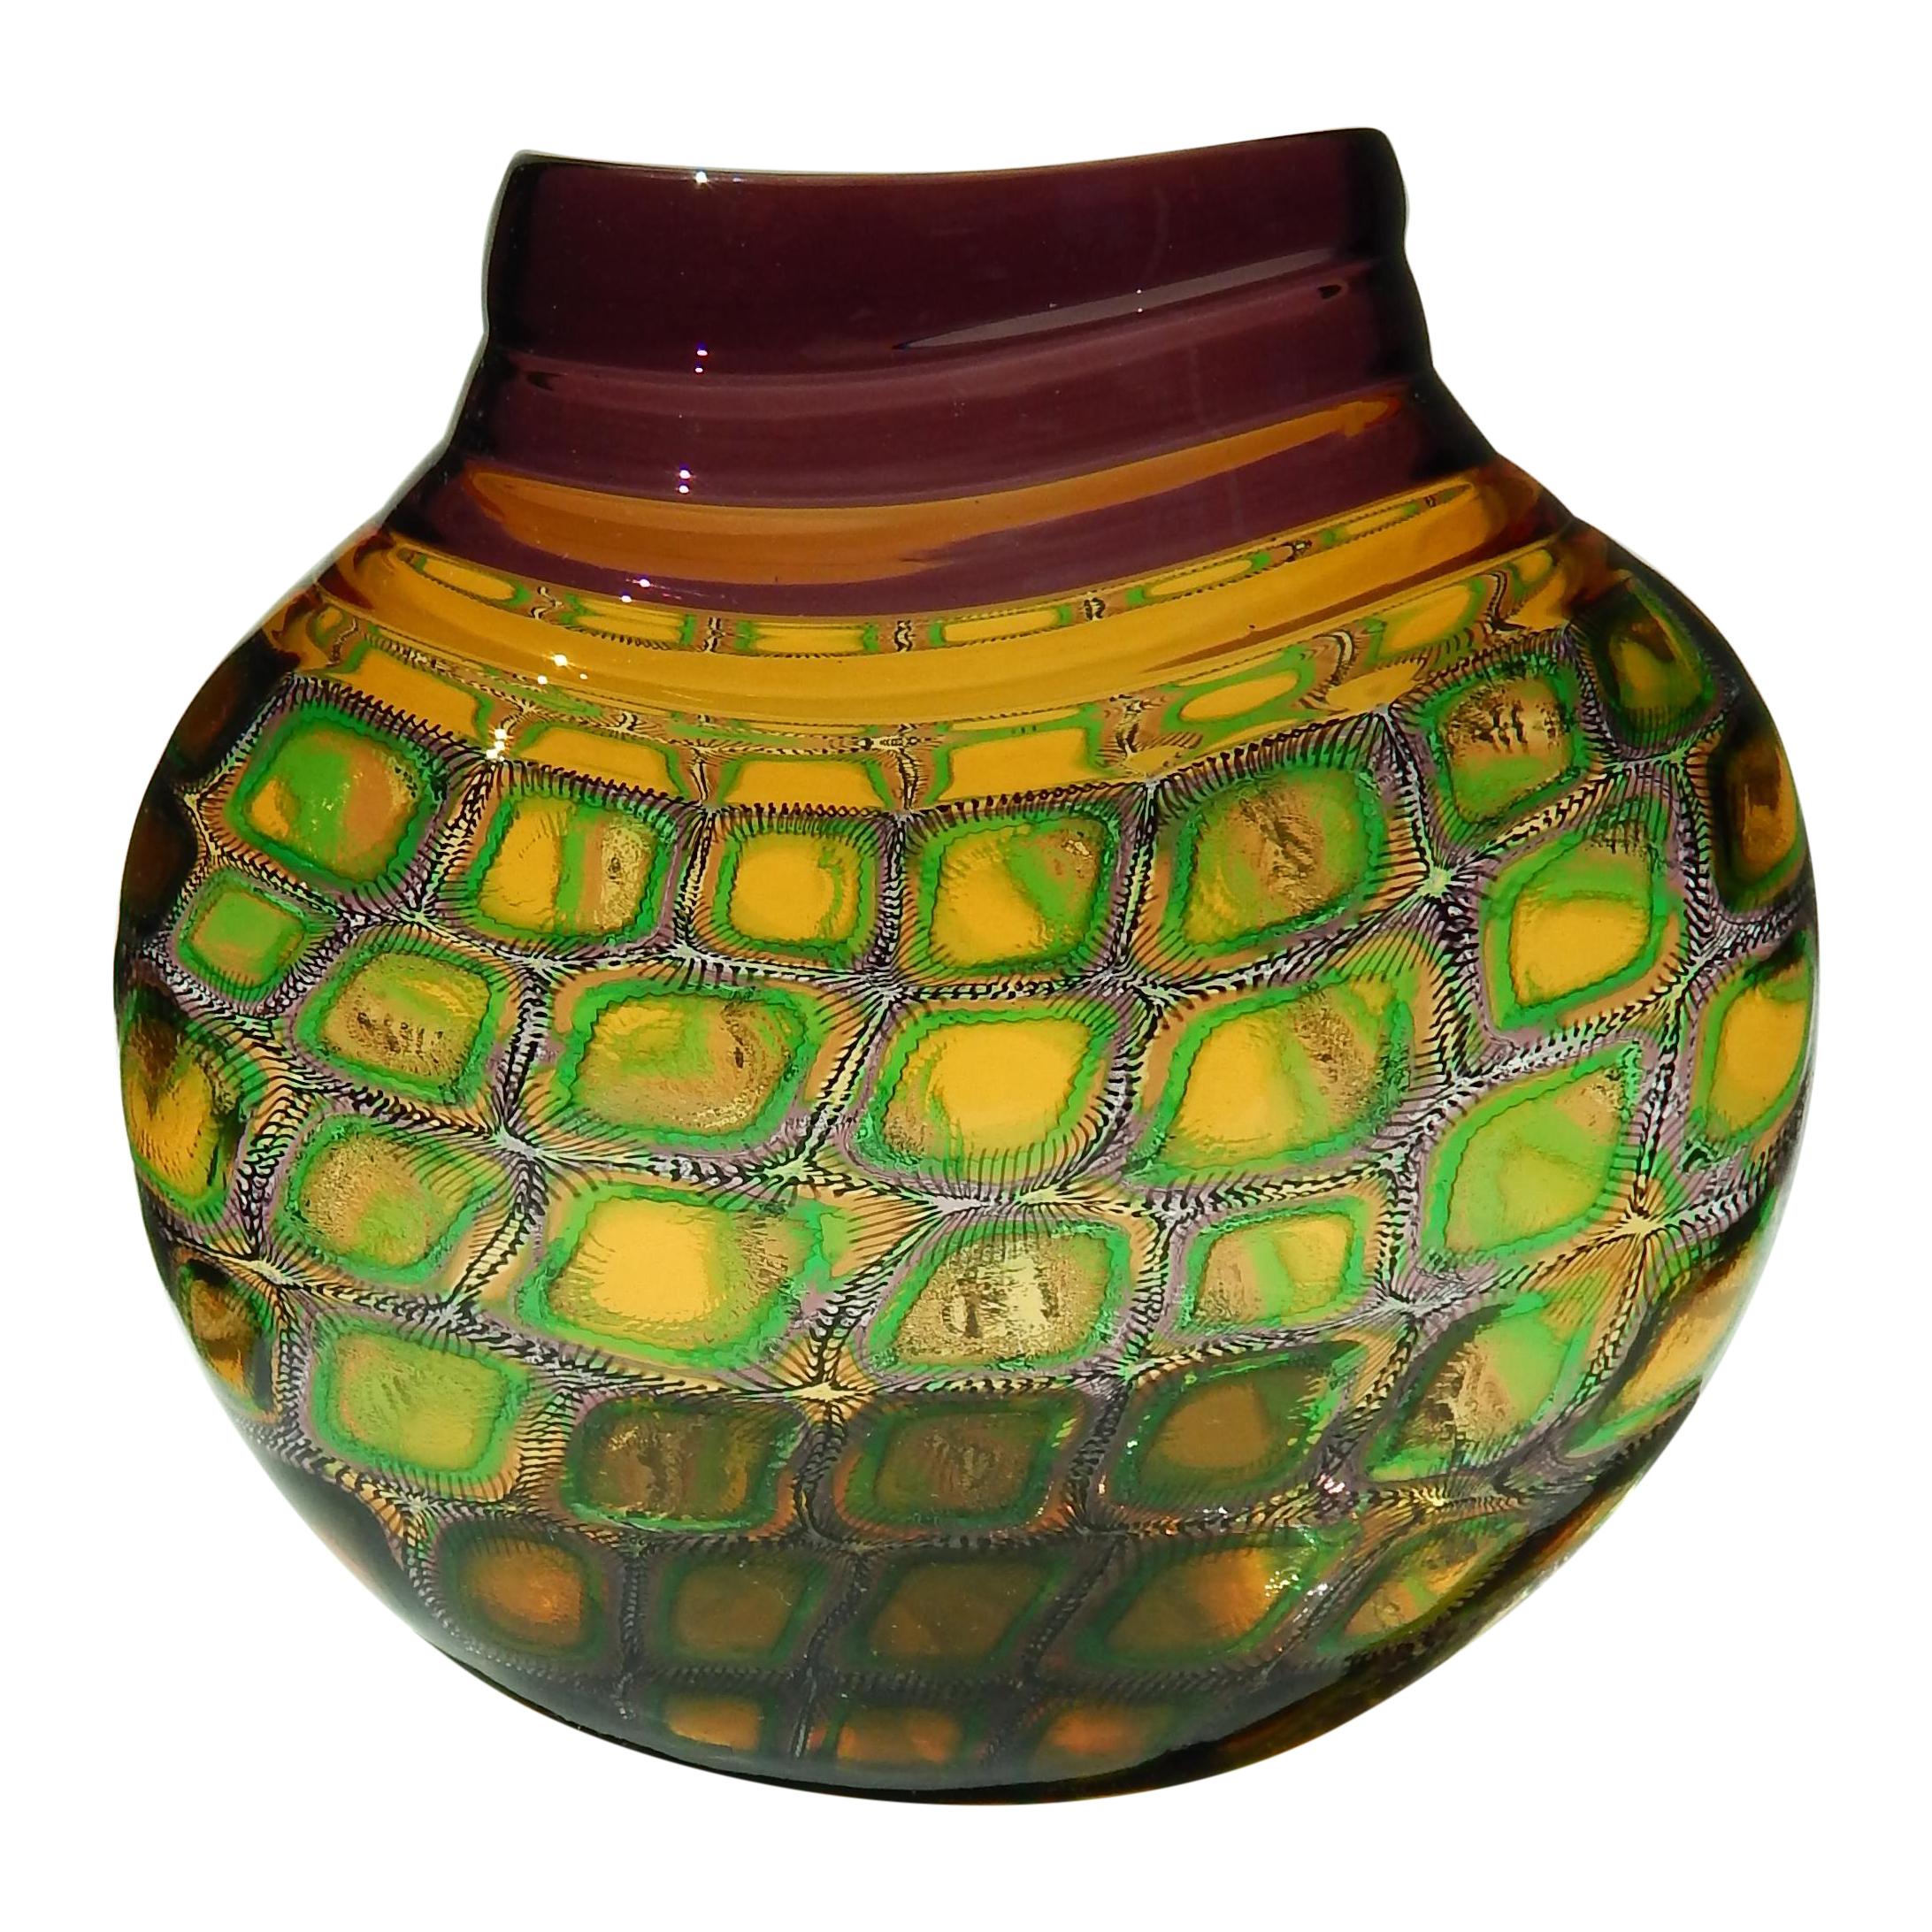 Adriano dalla Valentina Murrinni Glass Vase Amber and Green, Mosaica Motif